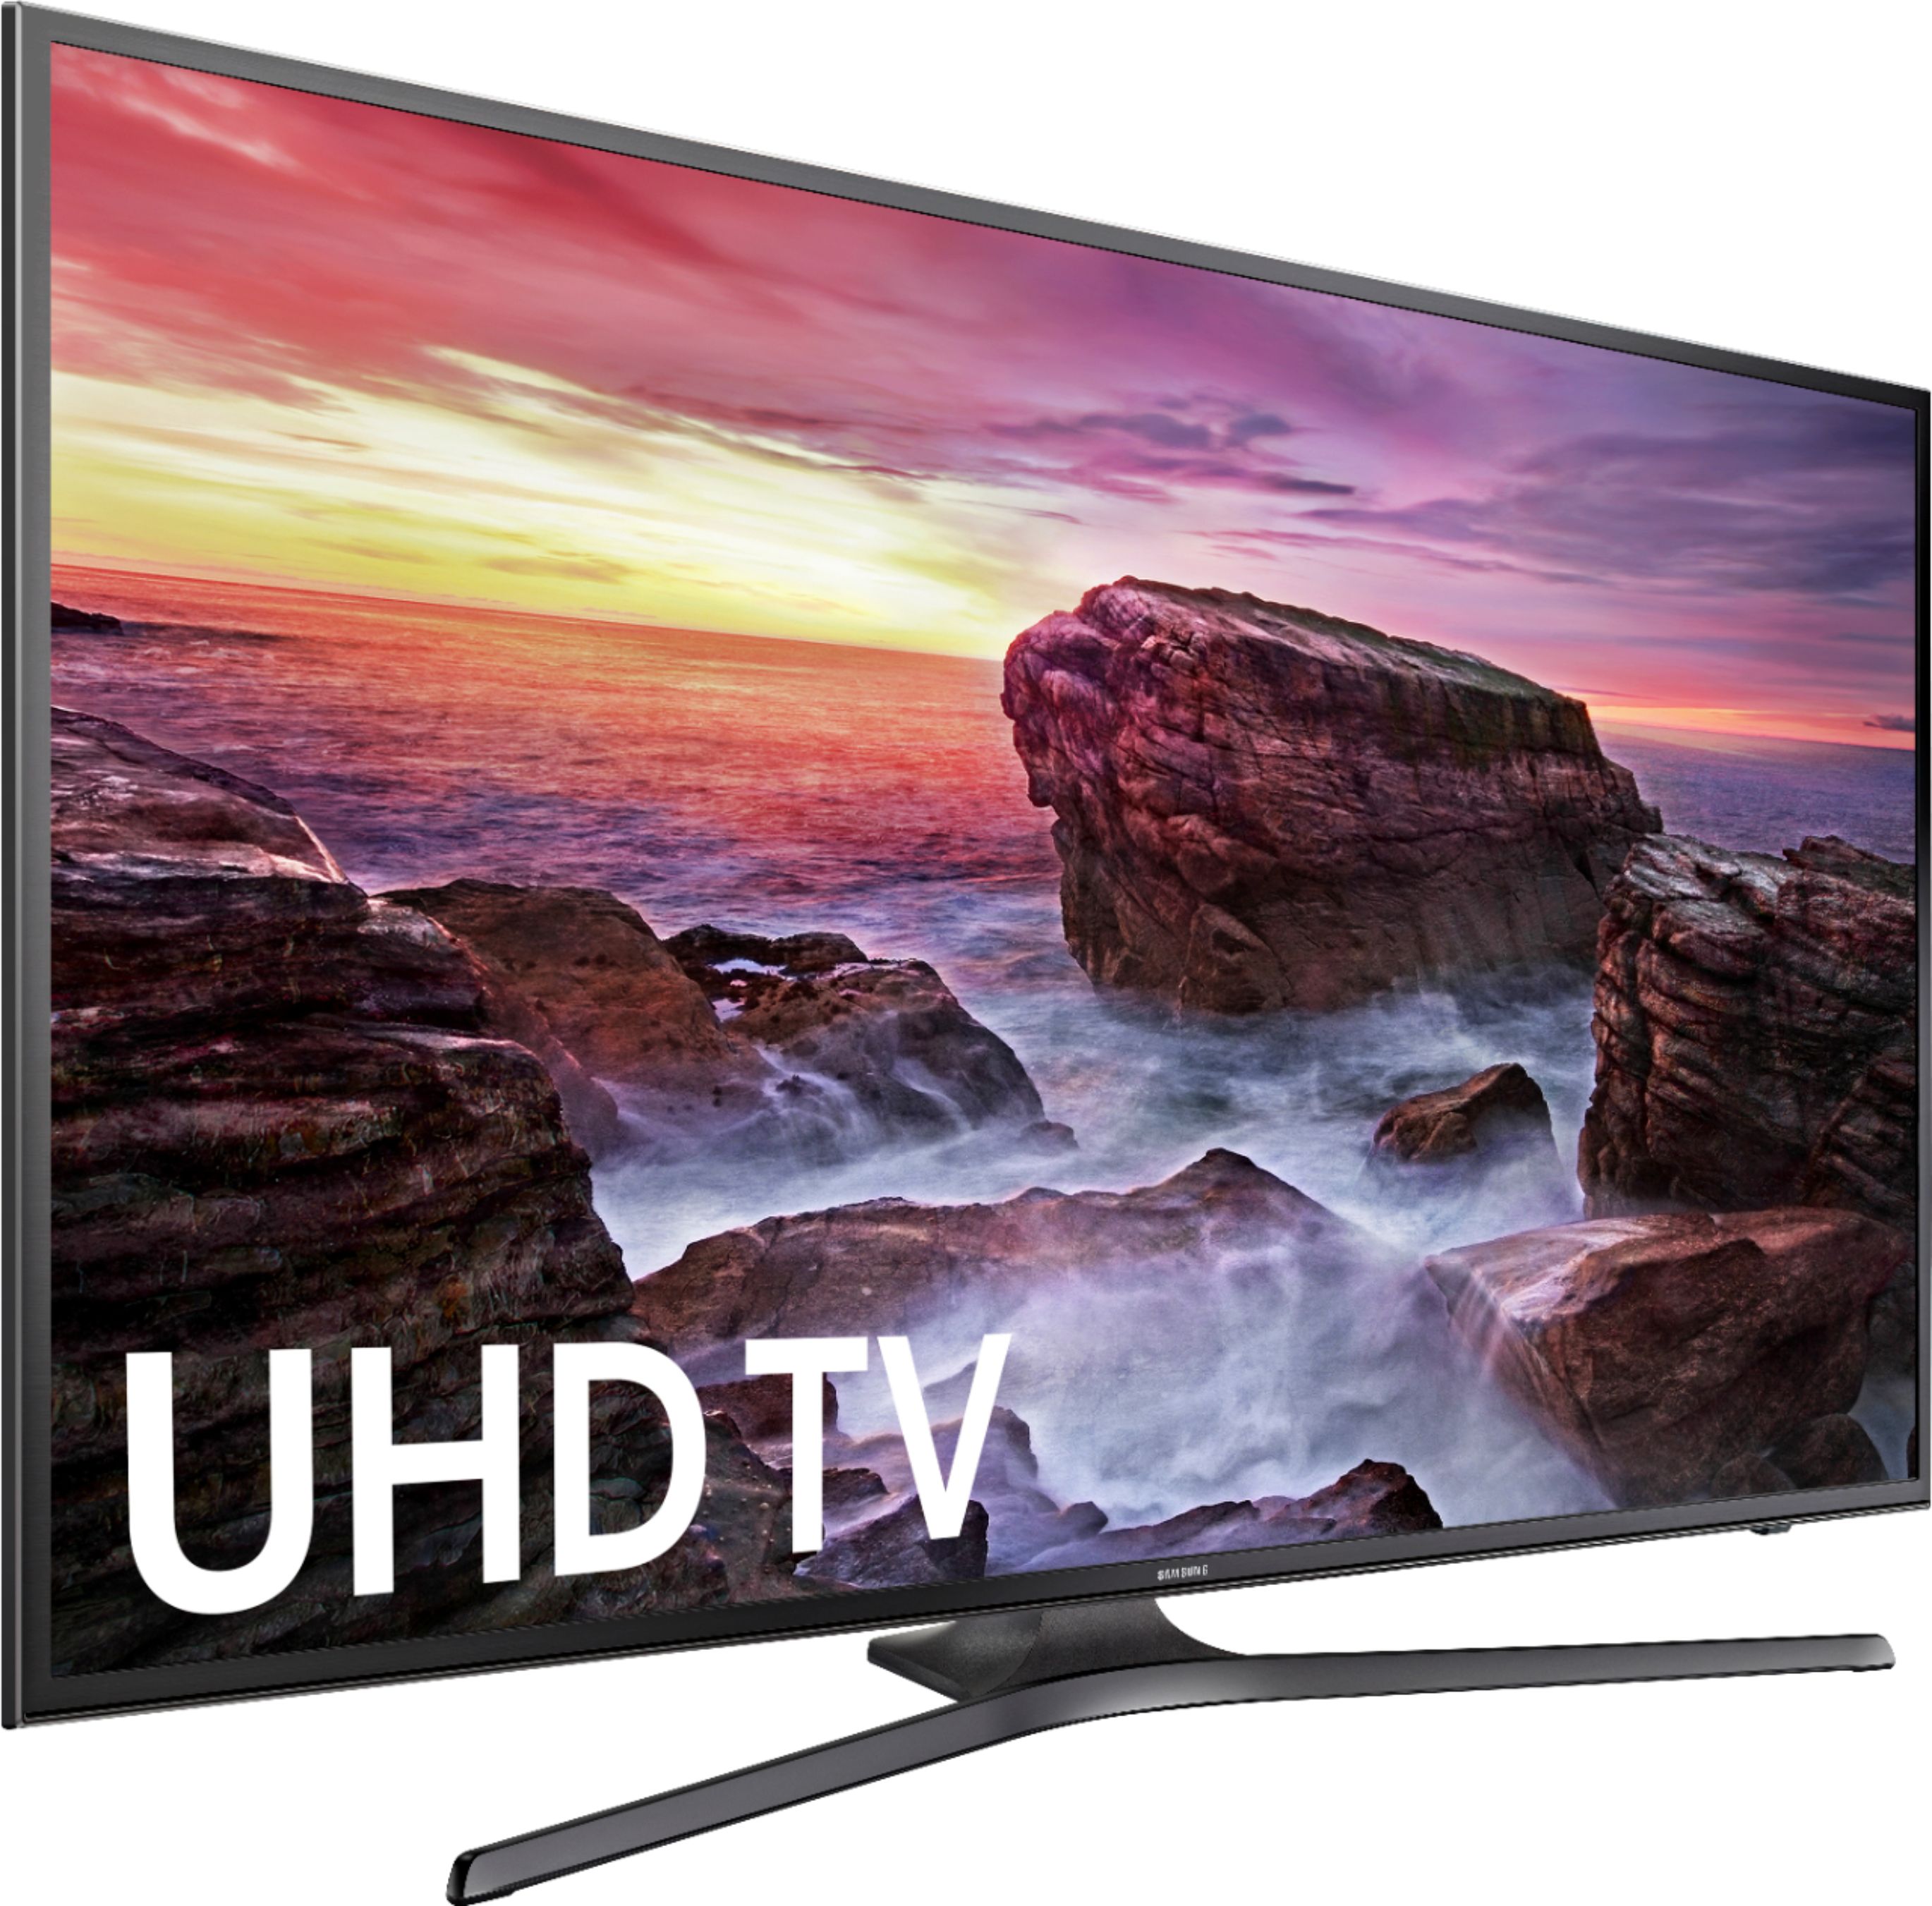 Best Buy: Samsung LED MU6070 Series 2160p Smart 4K Ultra HD TV with HDR UN50MU6070FXZA